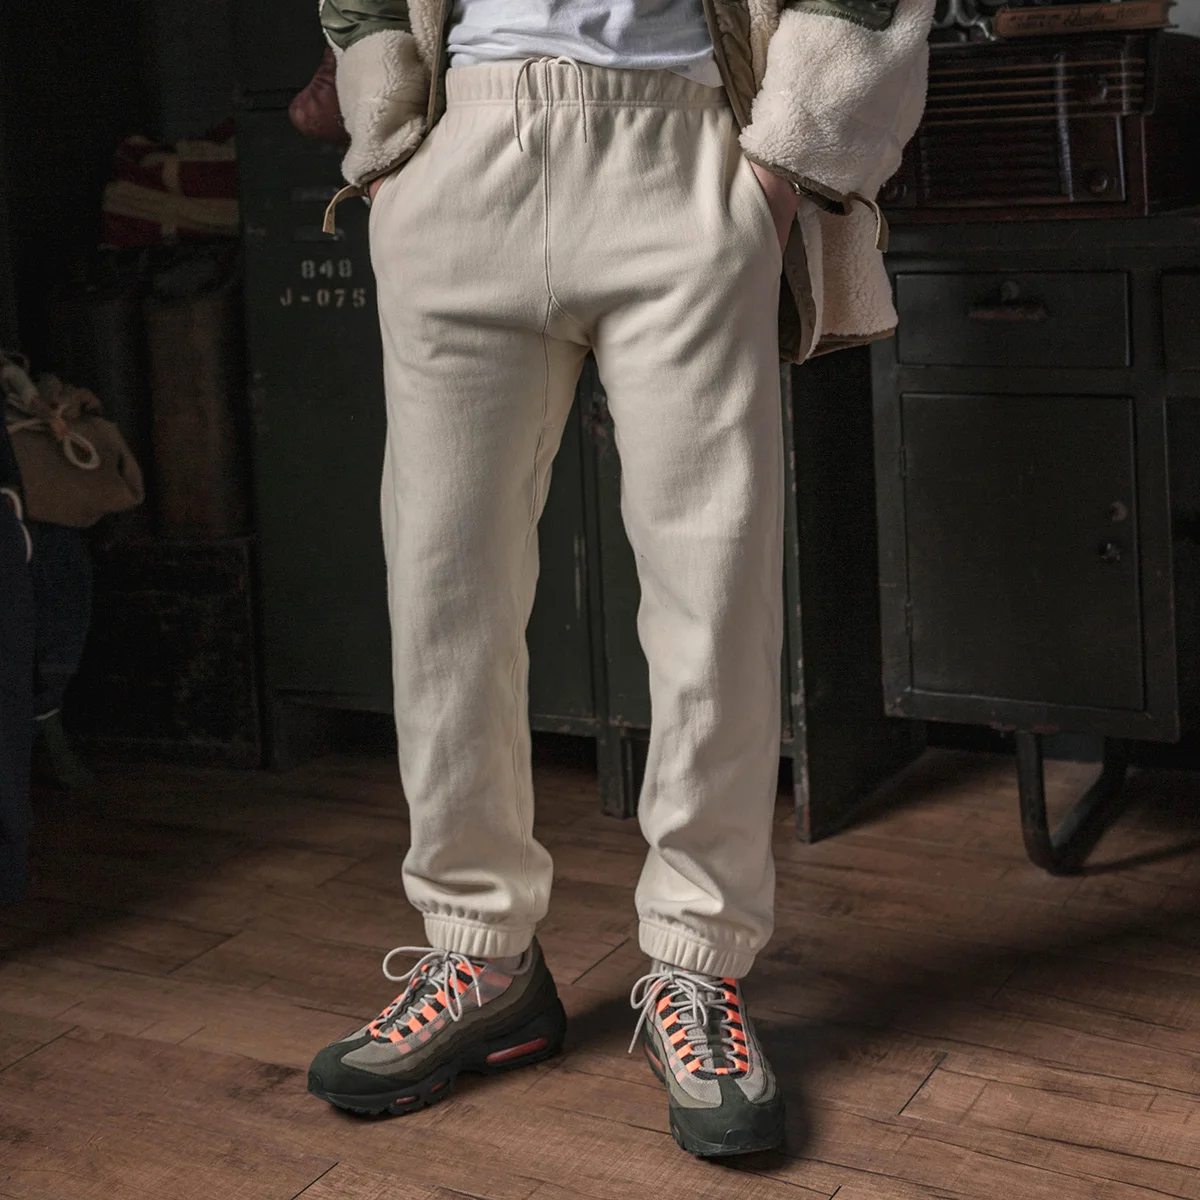 Bronson American Style Jogging Pants 1950s Men's Athletic Sweatpants Solid Color